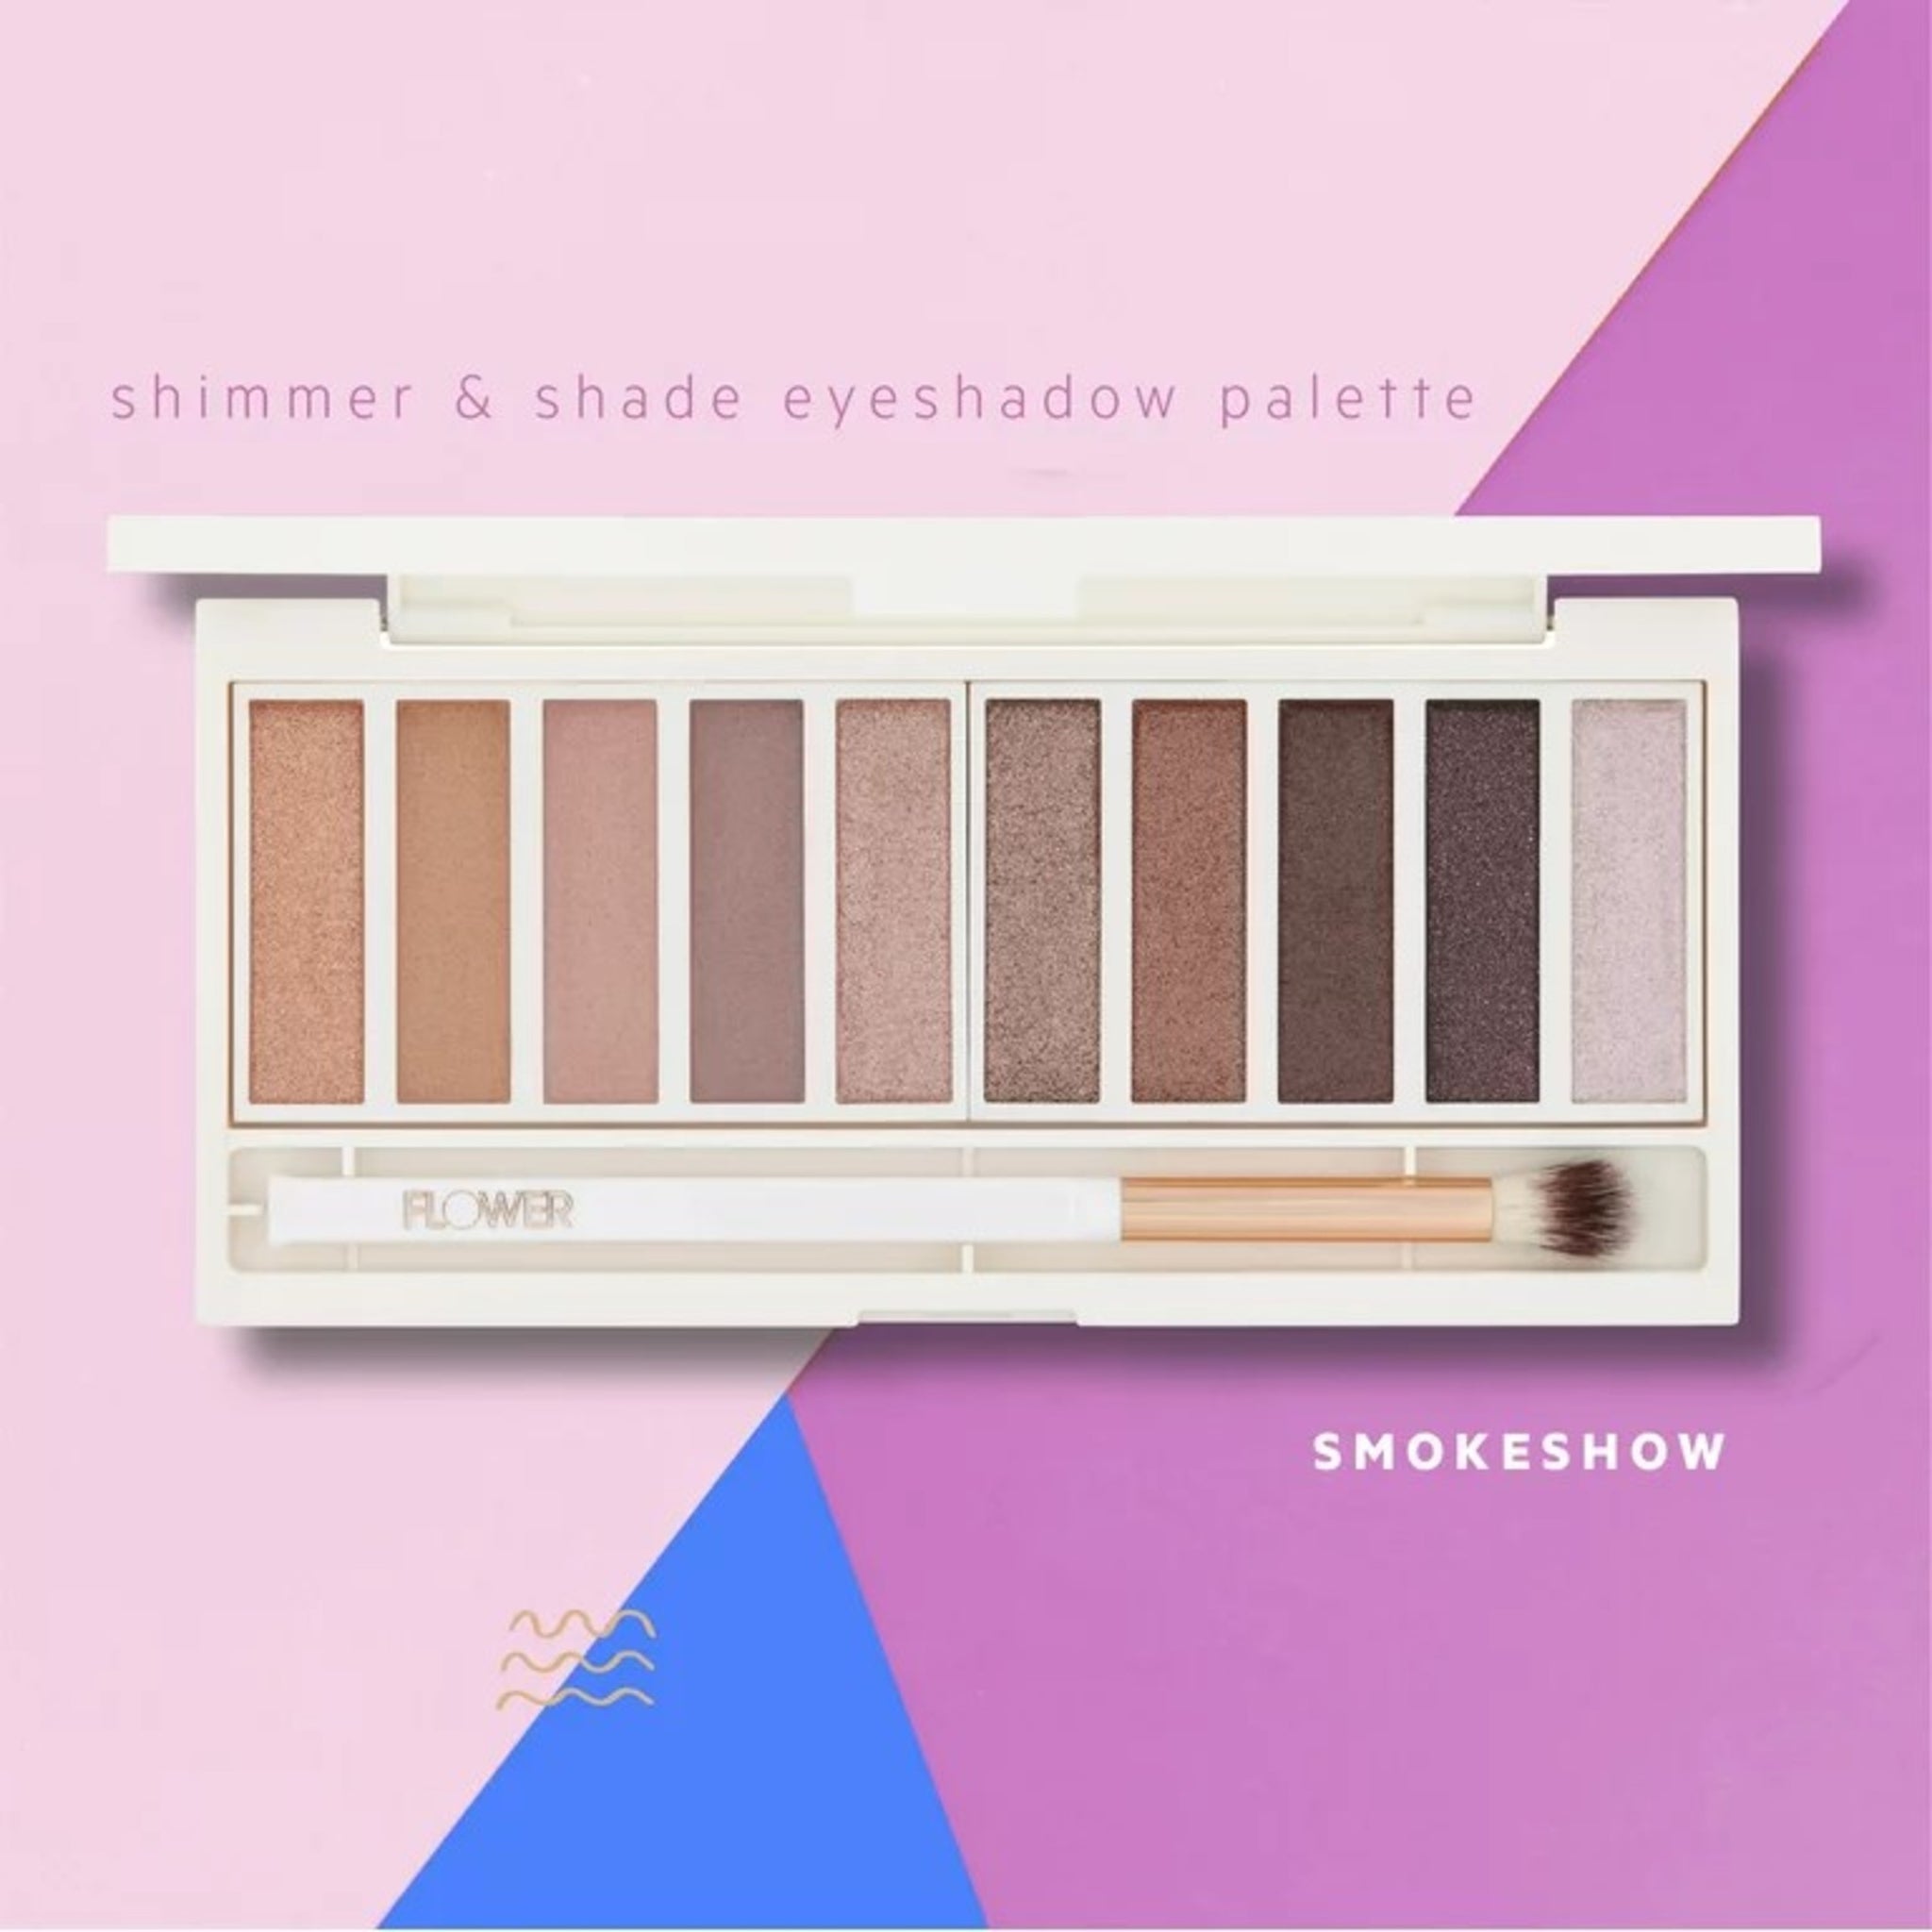 Shimmer & Shade Eyeshadow Palette